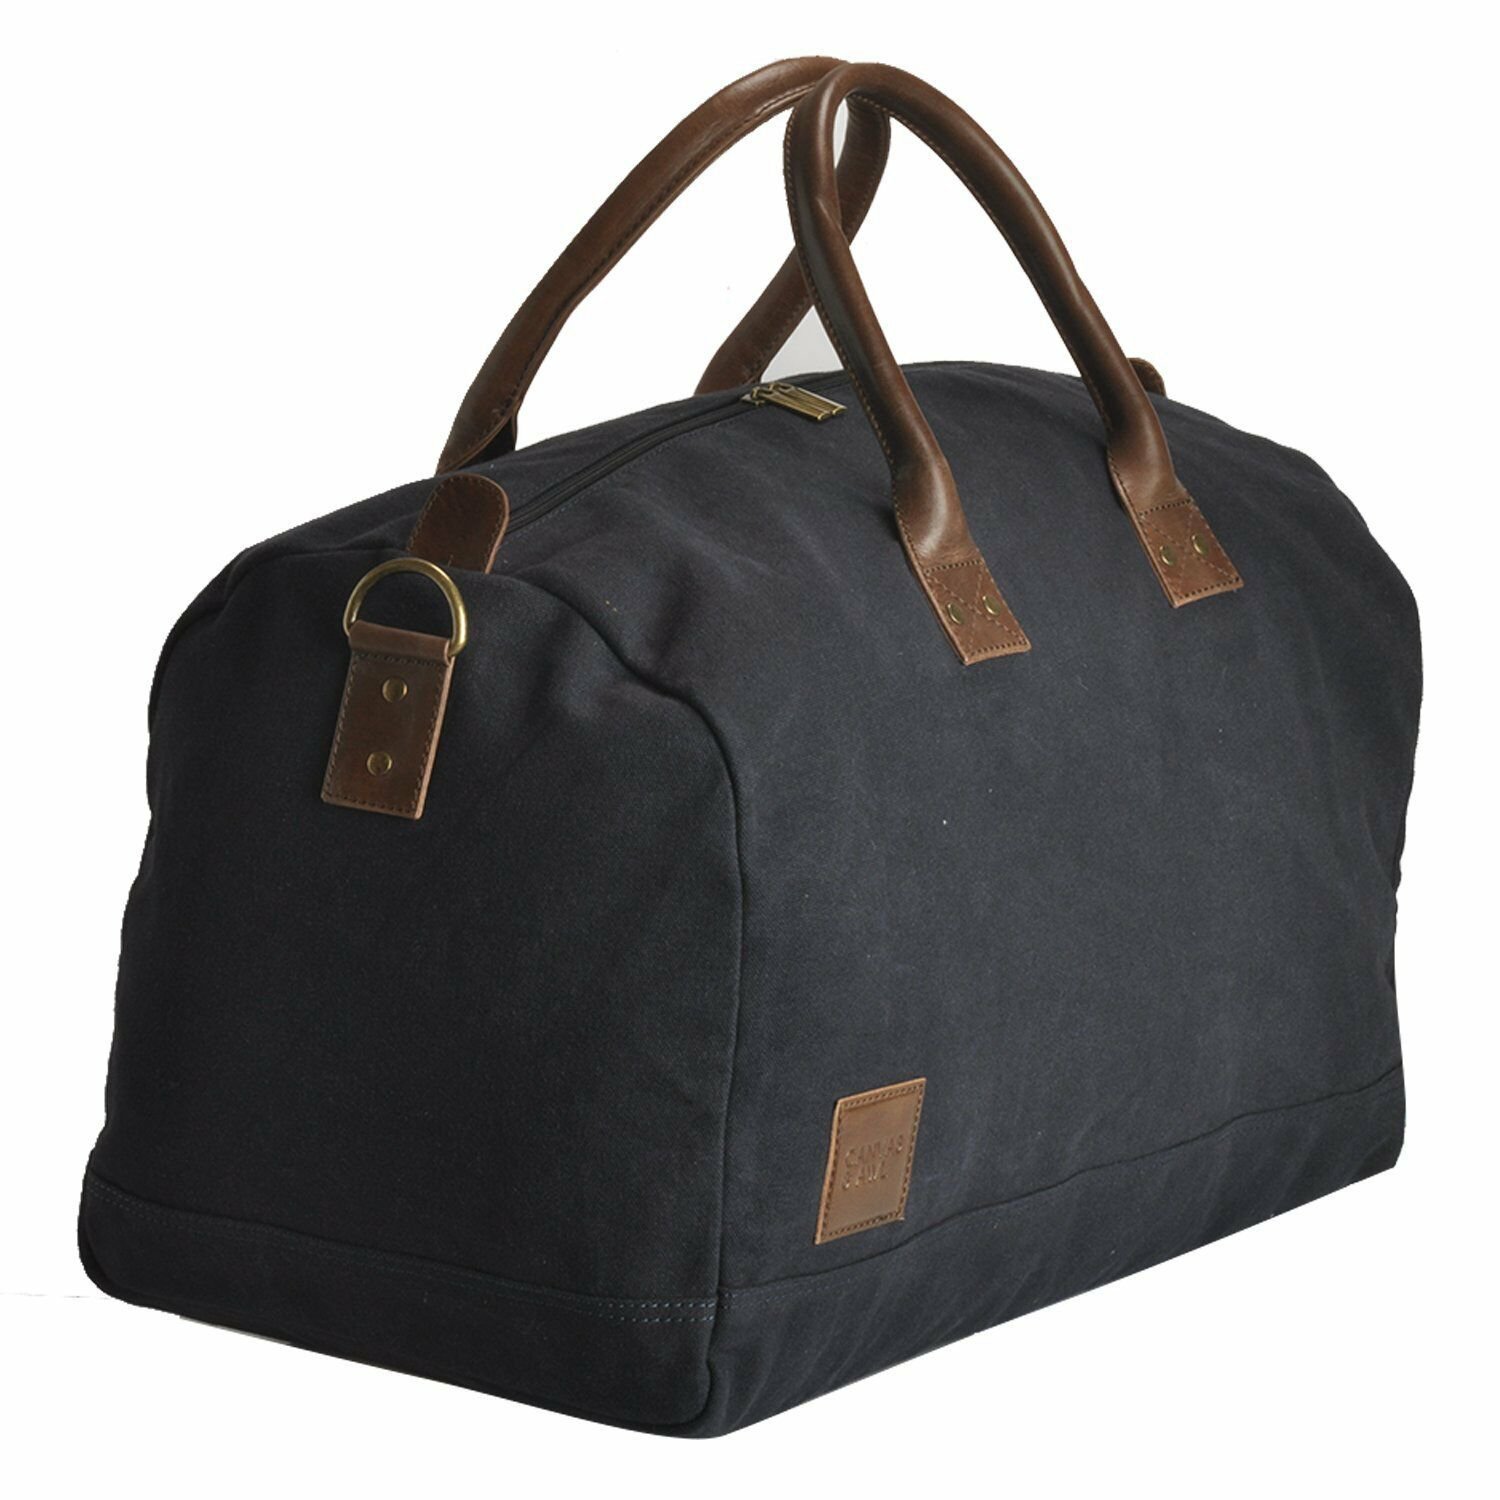 Navy Blue Canvas with Genuine Leather Trim Unisex Travel Duffel Bag Weekender